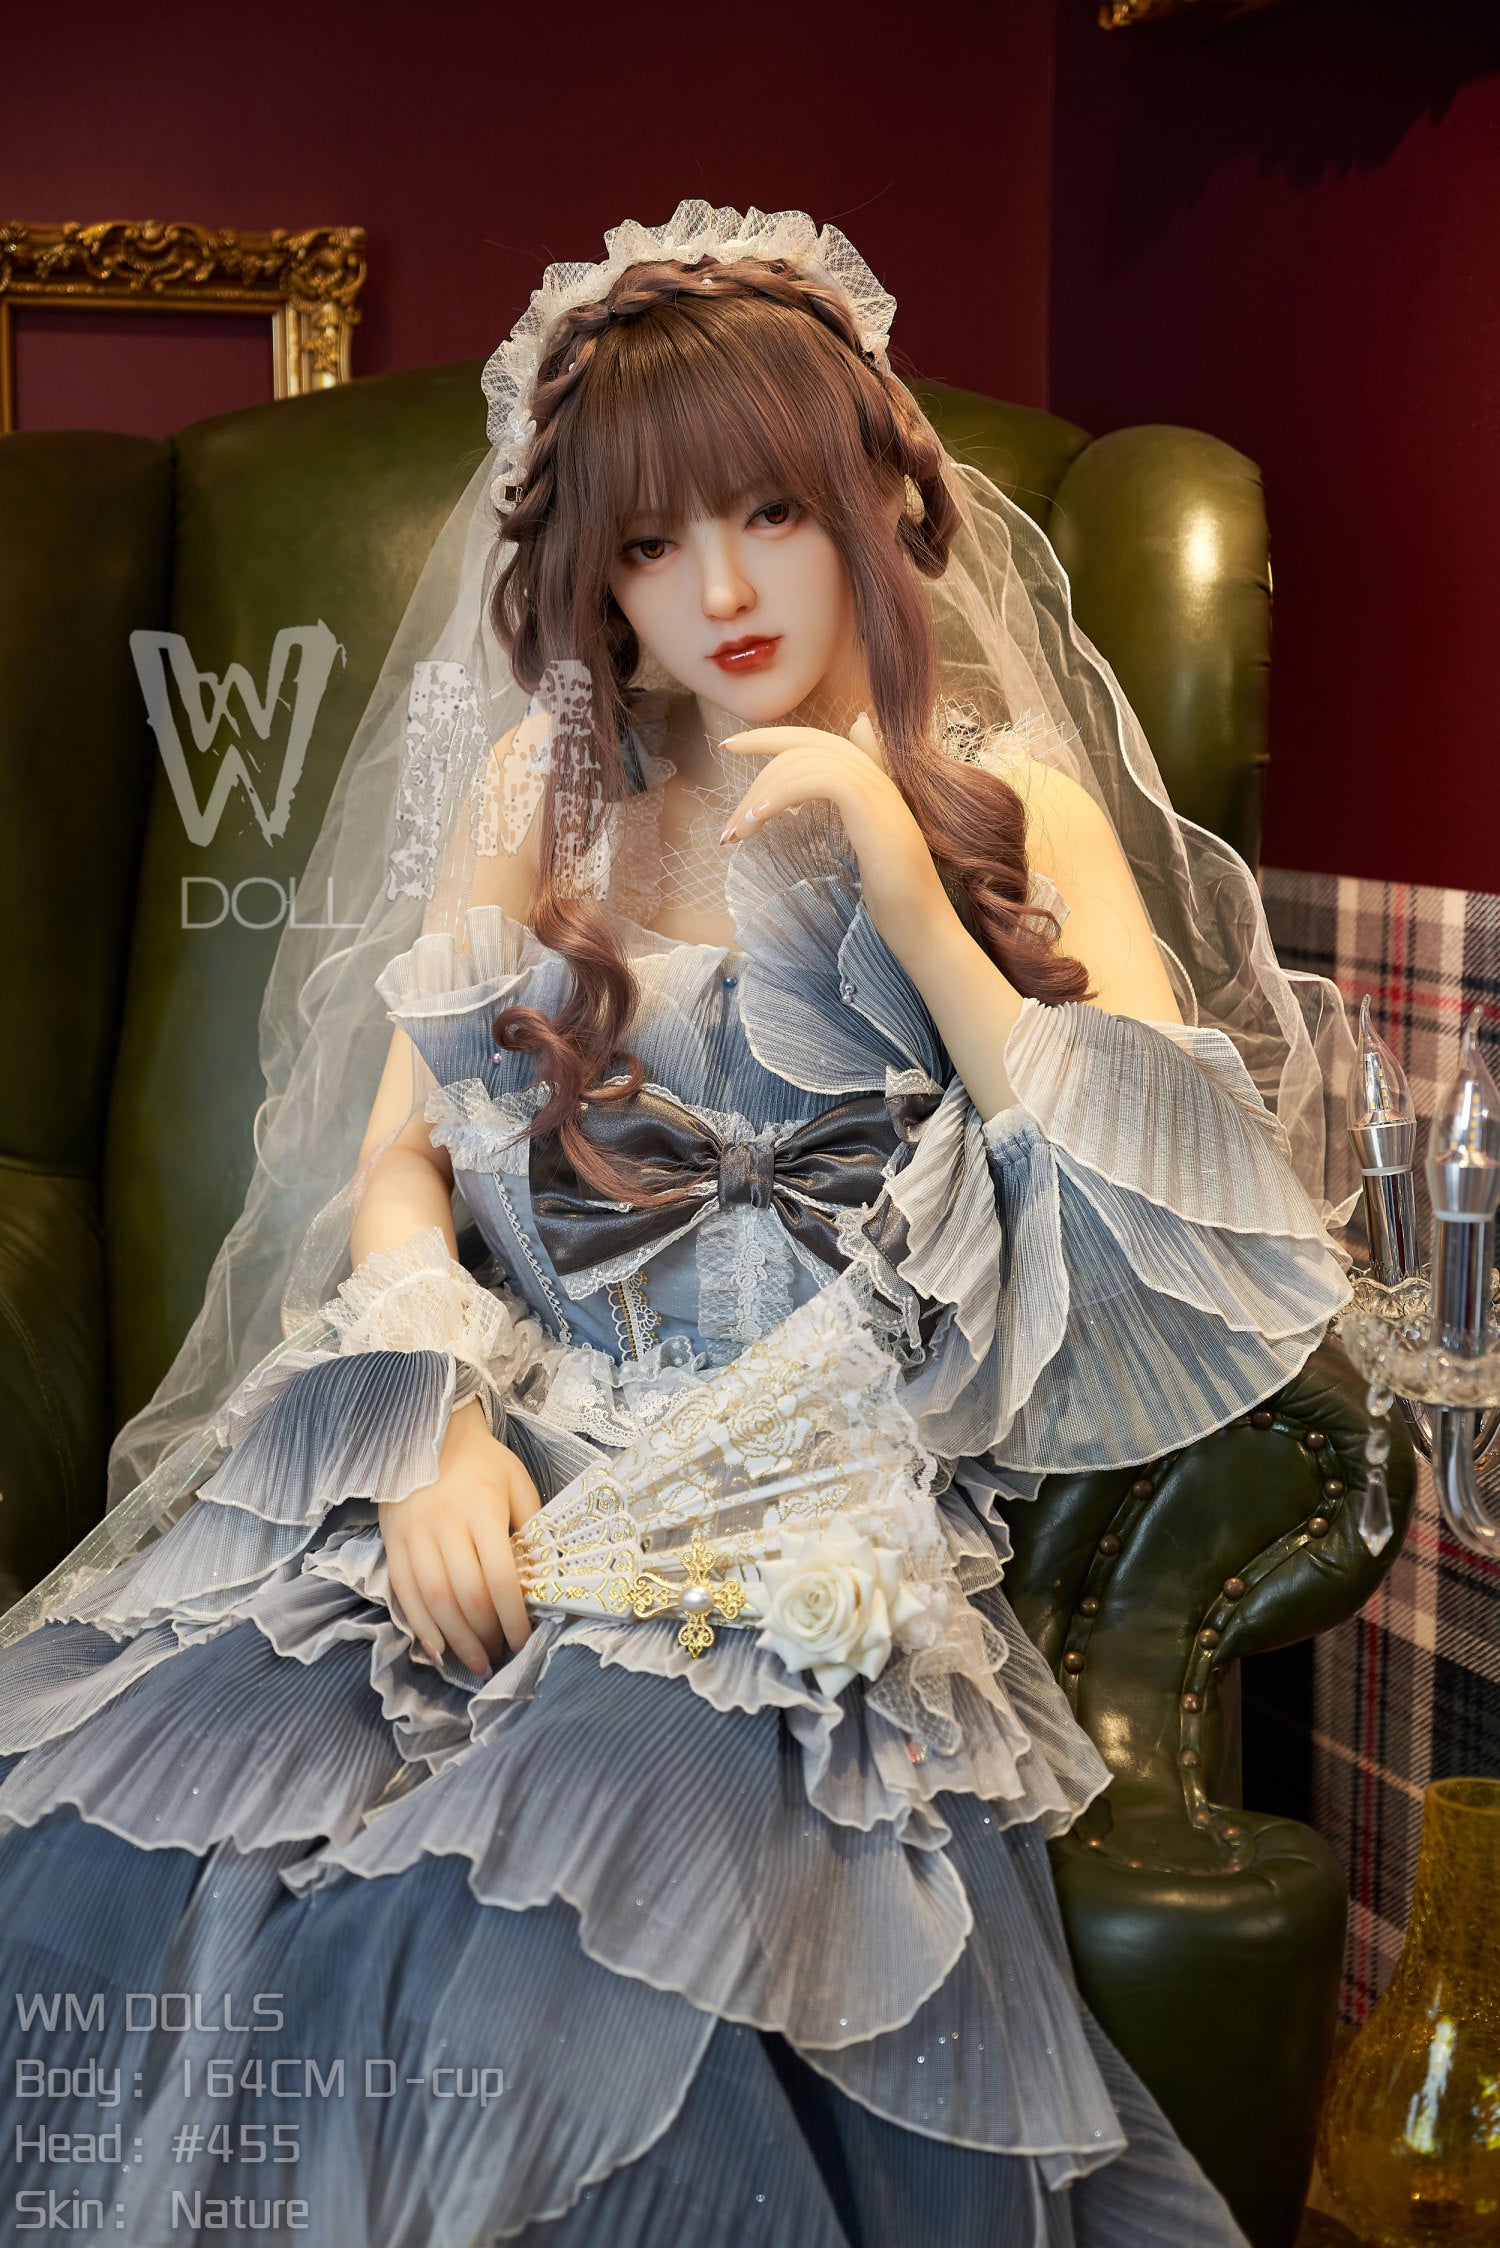 WM Dolls Beni 164cm D Cup #455 Normal Skin Sister Love Doll